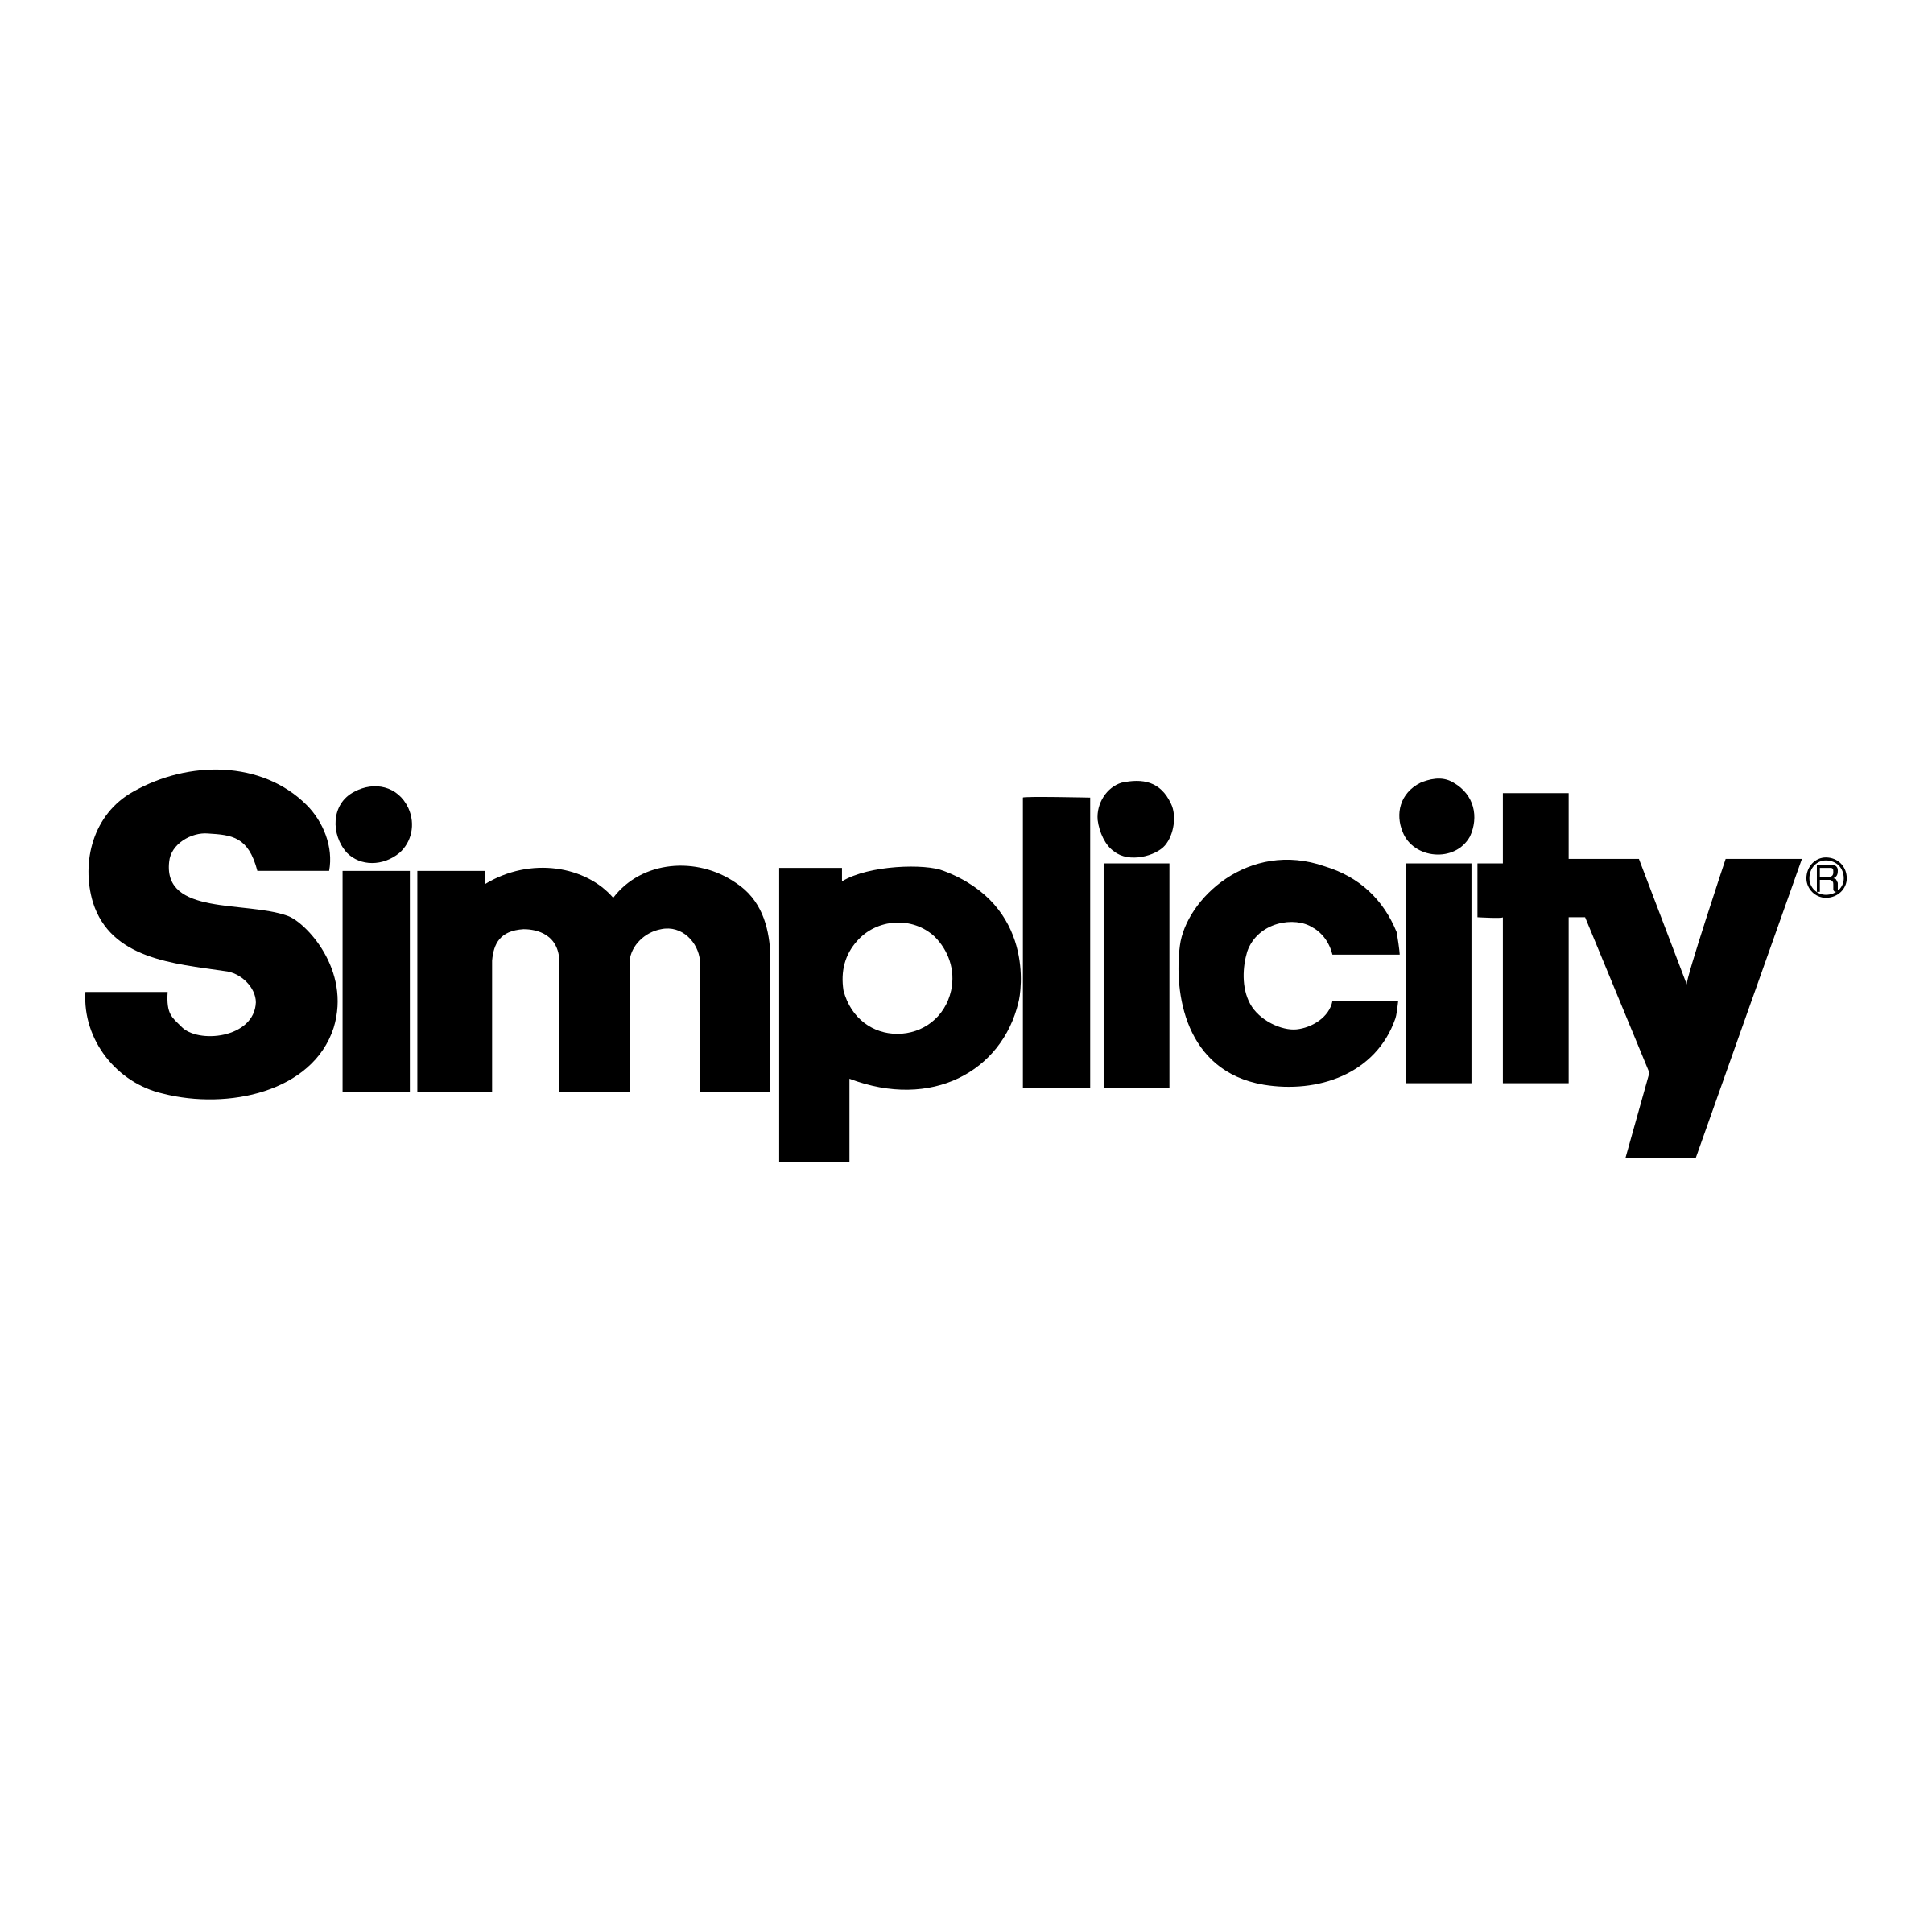 Simplicity Logo - Simplicity Logo PNG Transparent & SVG Vector - Freebie Supply